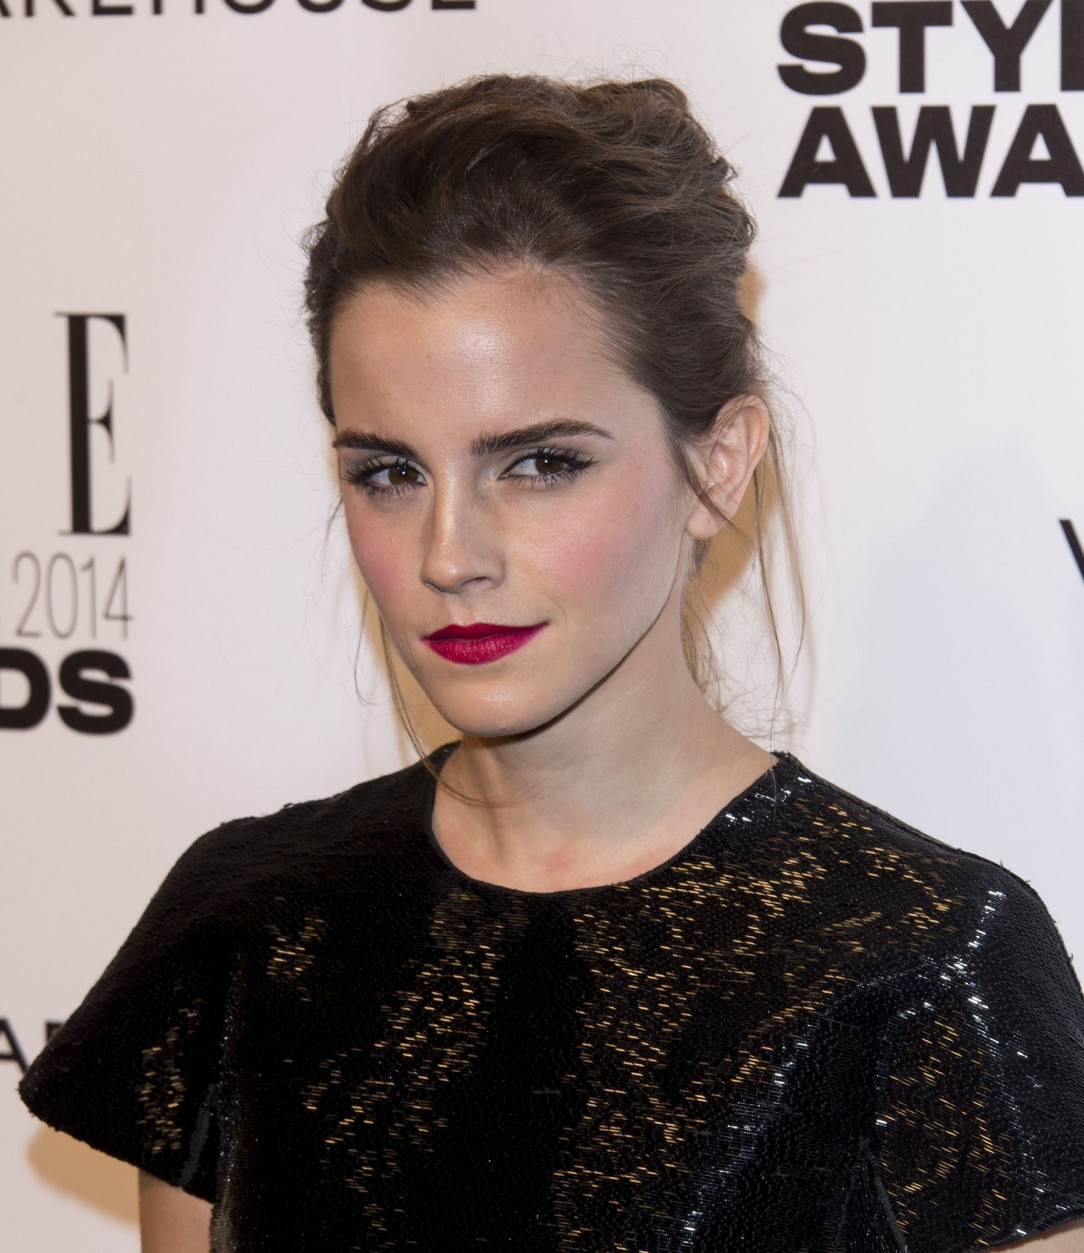 Elle Style Awards, 2014